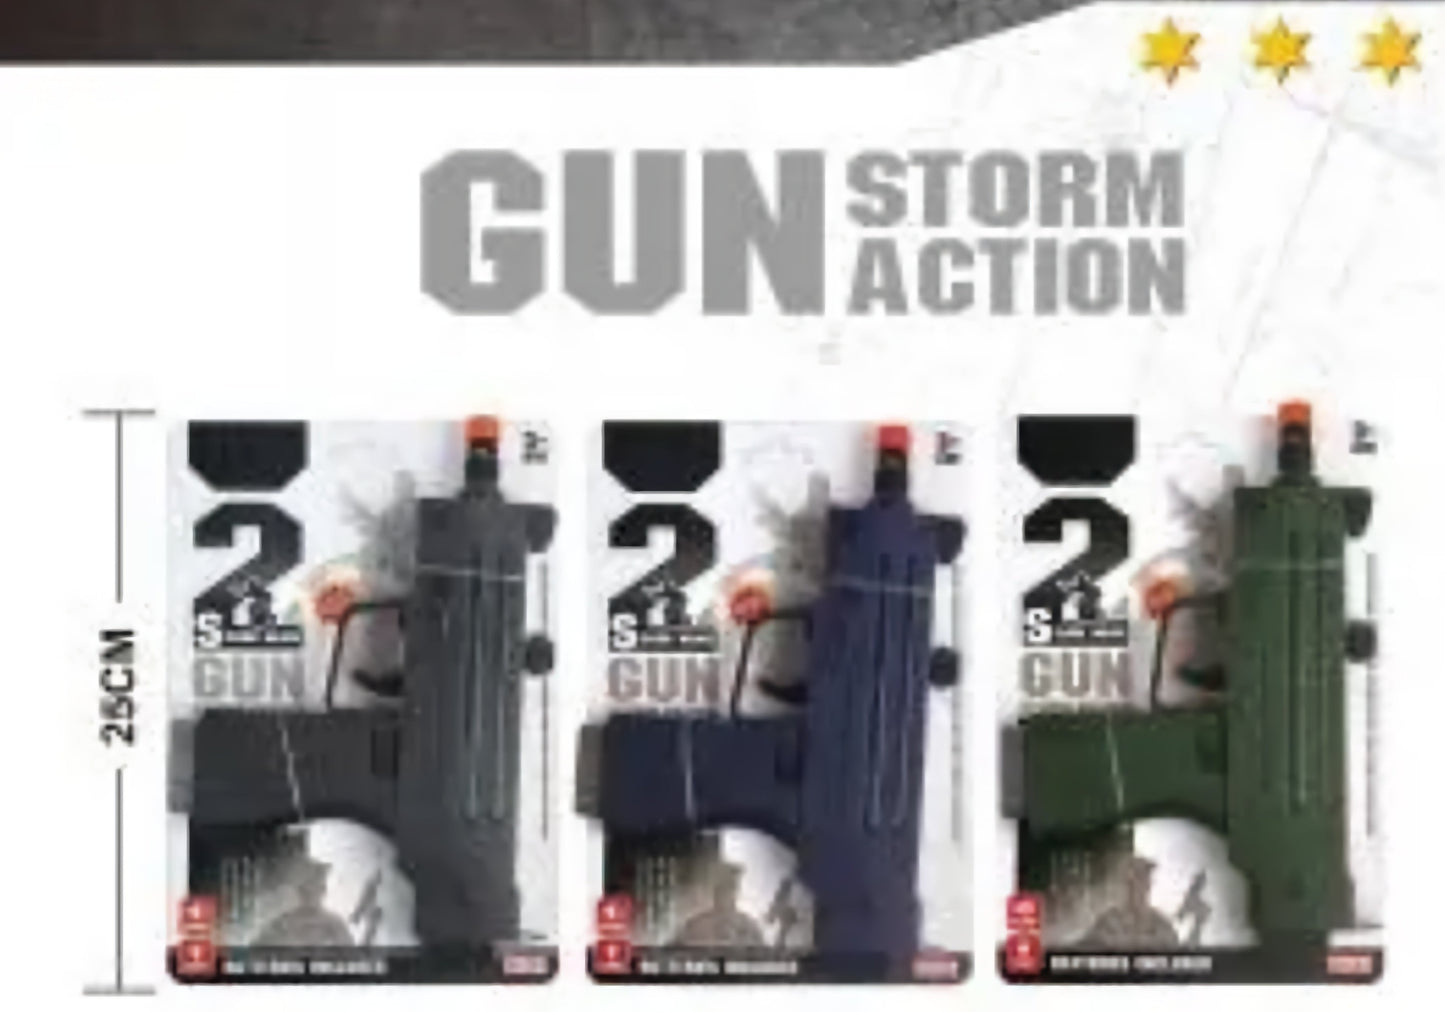 Storm Action Gun - Uzi 9mm Style